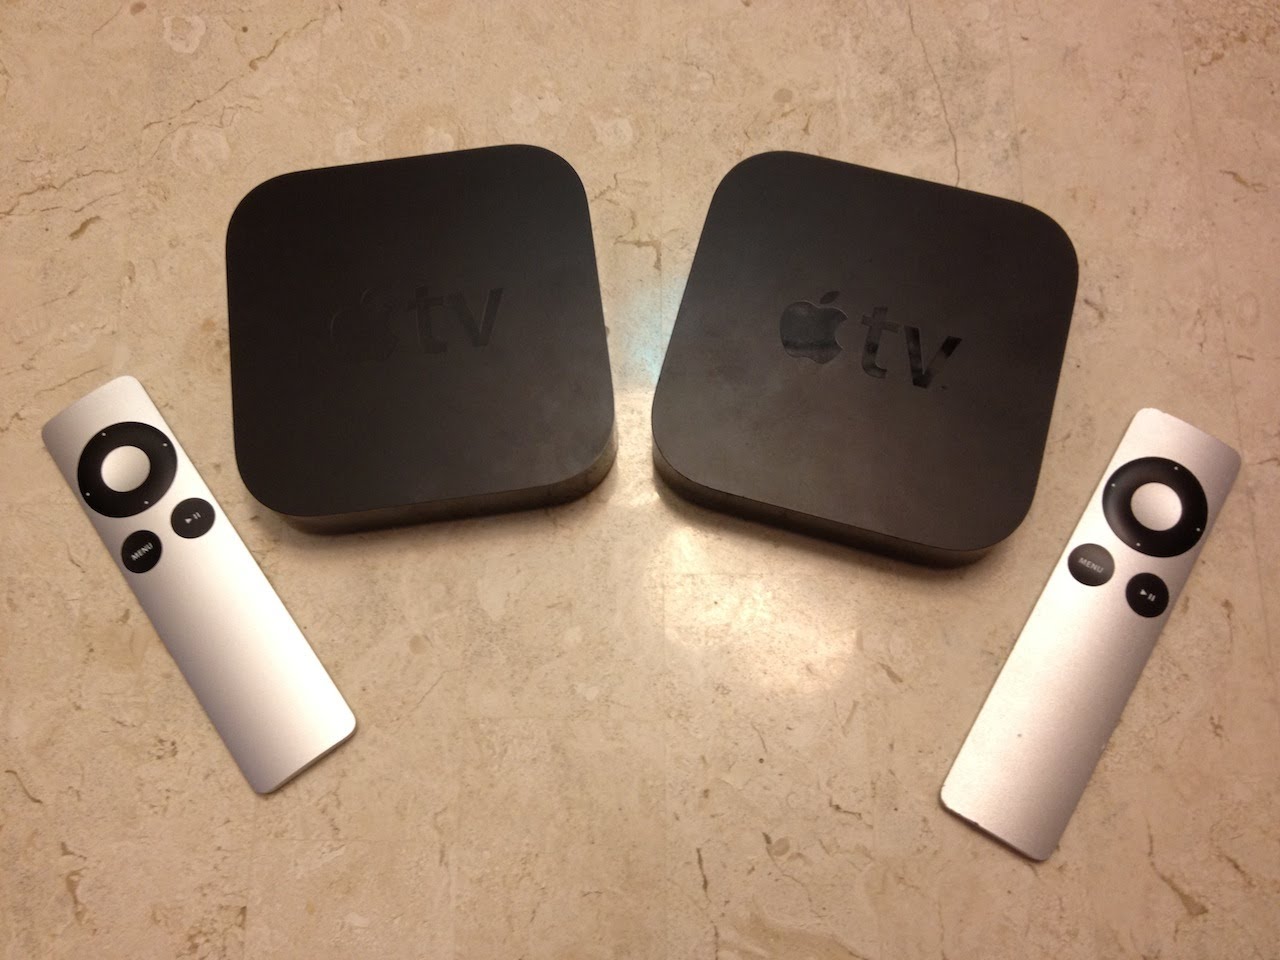 New AppleTV 3rd Gen Vs. 2nd Gen Model.